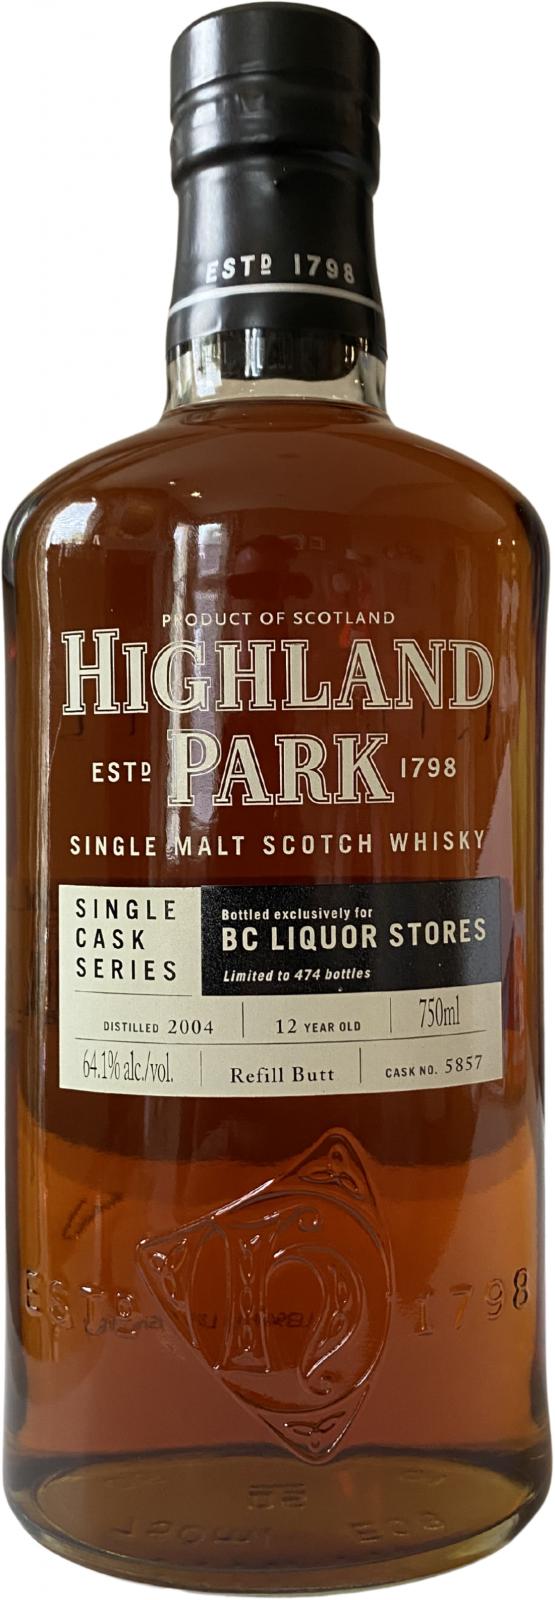 Highland Park 2004 Single Cask Series Refill Butt #5857 BC Liquor Stores Exclusive 64.1% 700ml